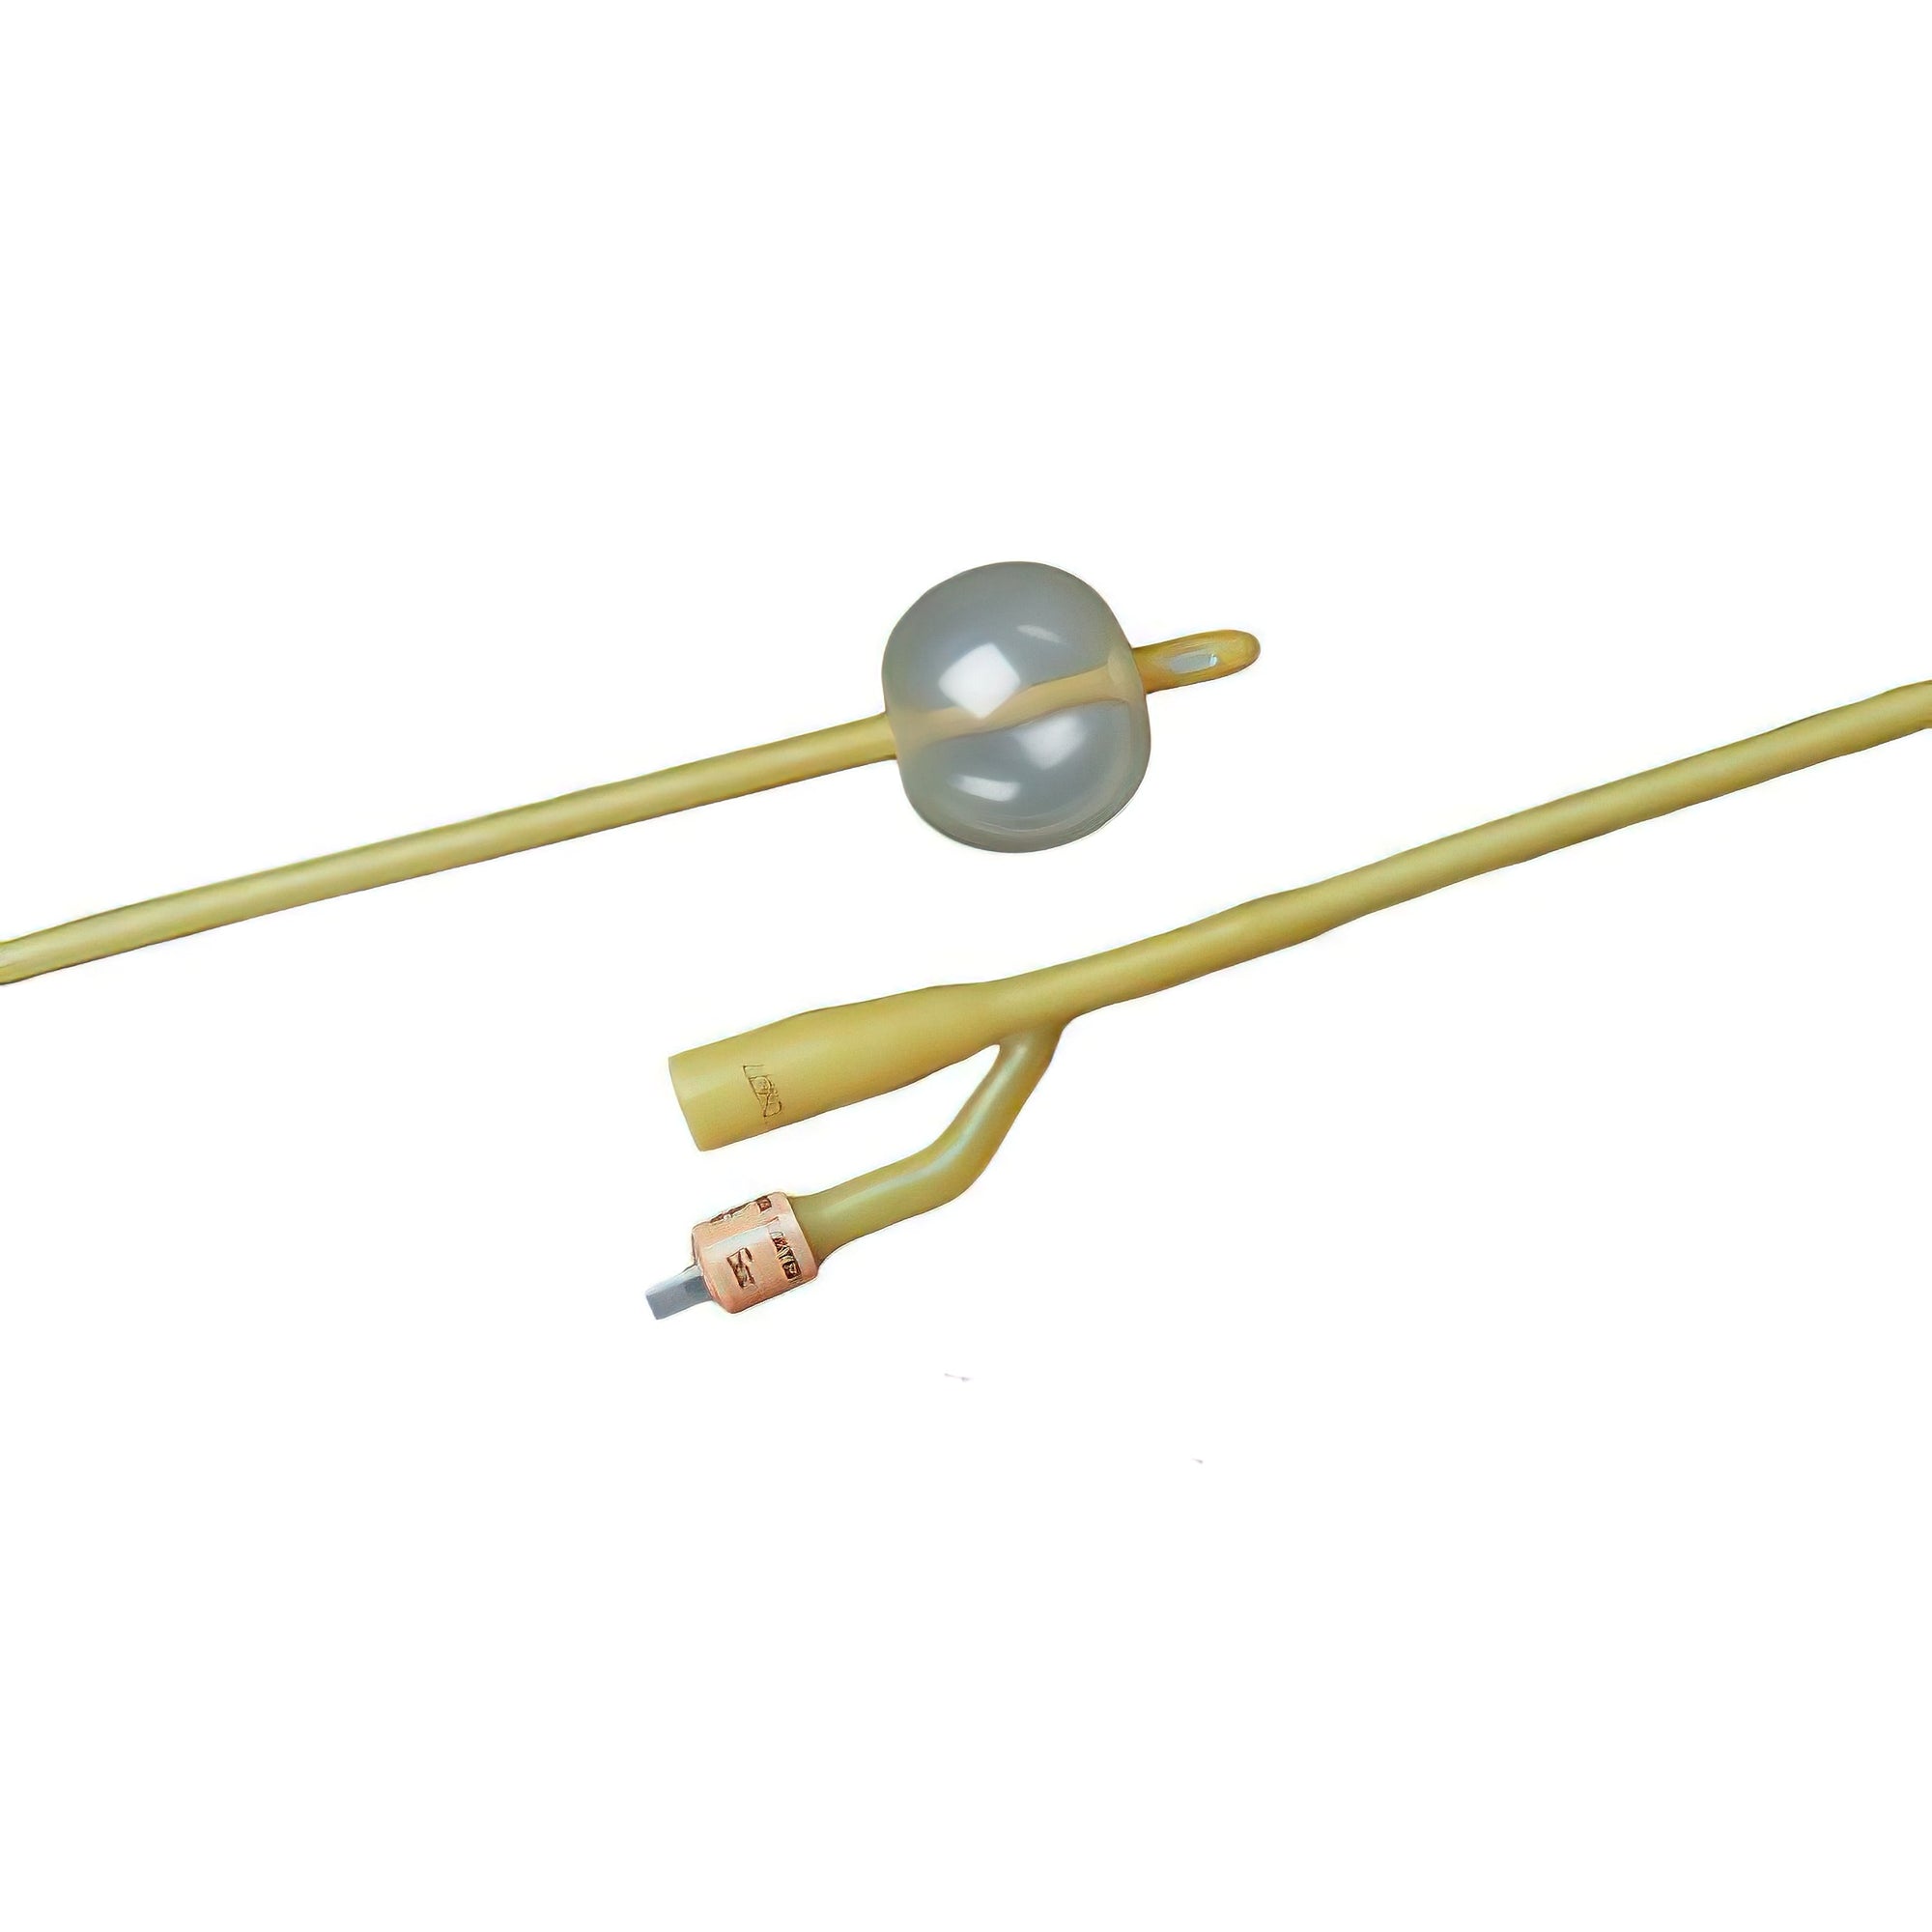 Bard 14 Fr. Plastic Suction Catheter 0360140 Case of 50 – Ma Deuce Trading  Post